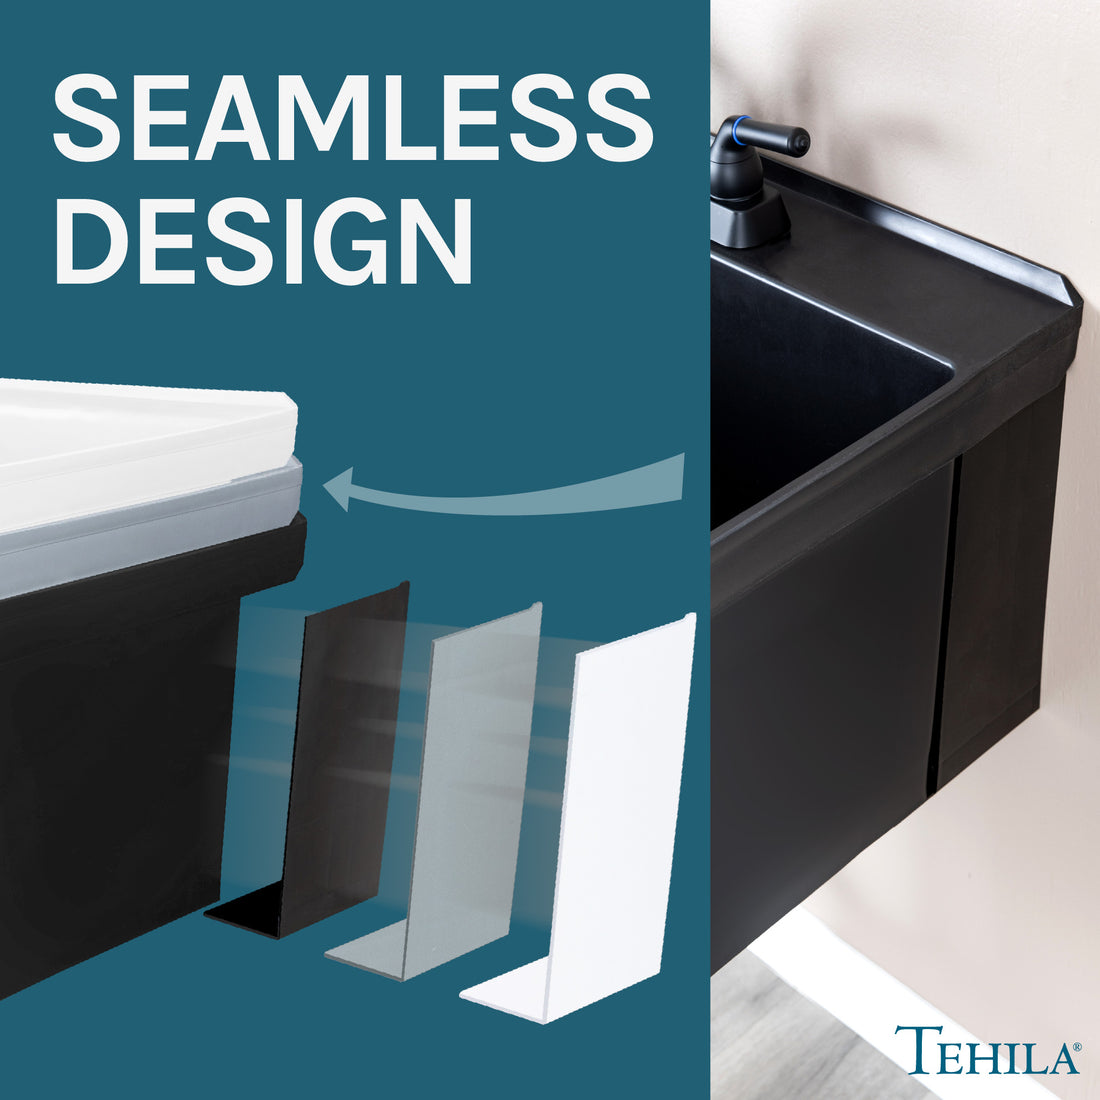 Tehila Standard Wall-Mounted Black Utility Sink with Black Finish Pull-Out Faucet - Utility sinks vanites Tehila